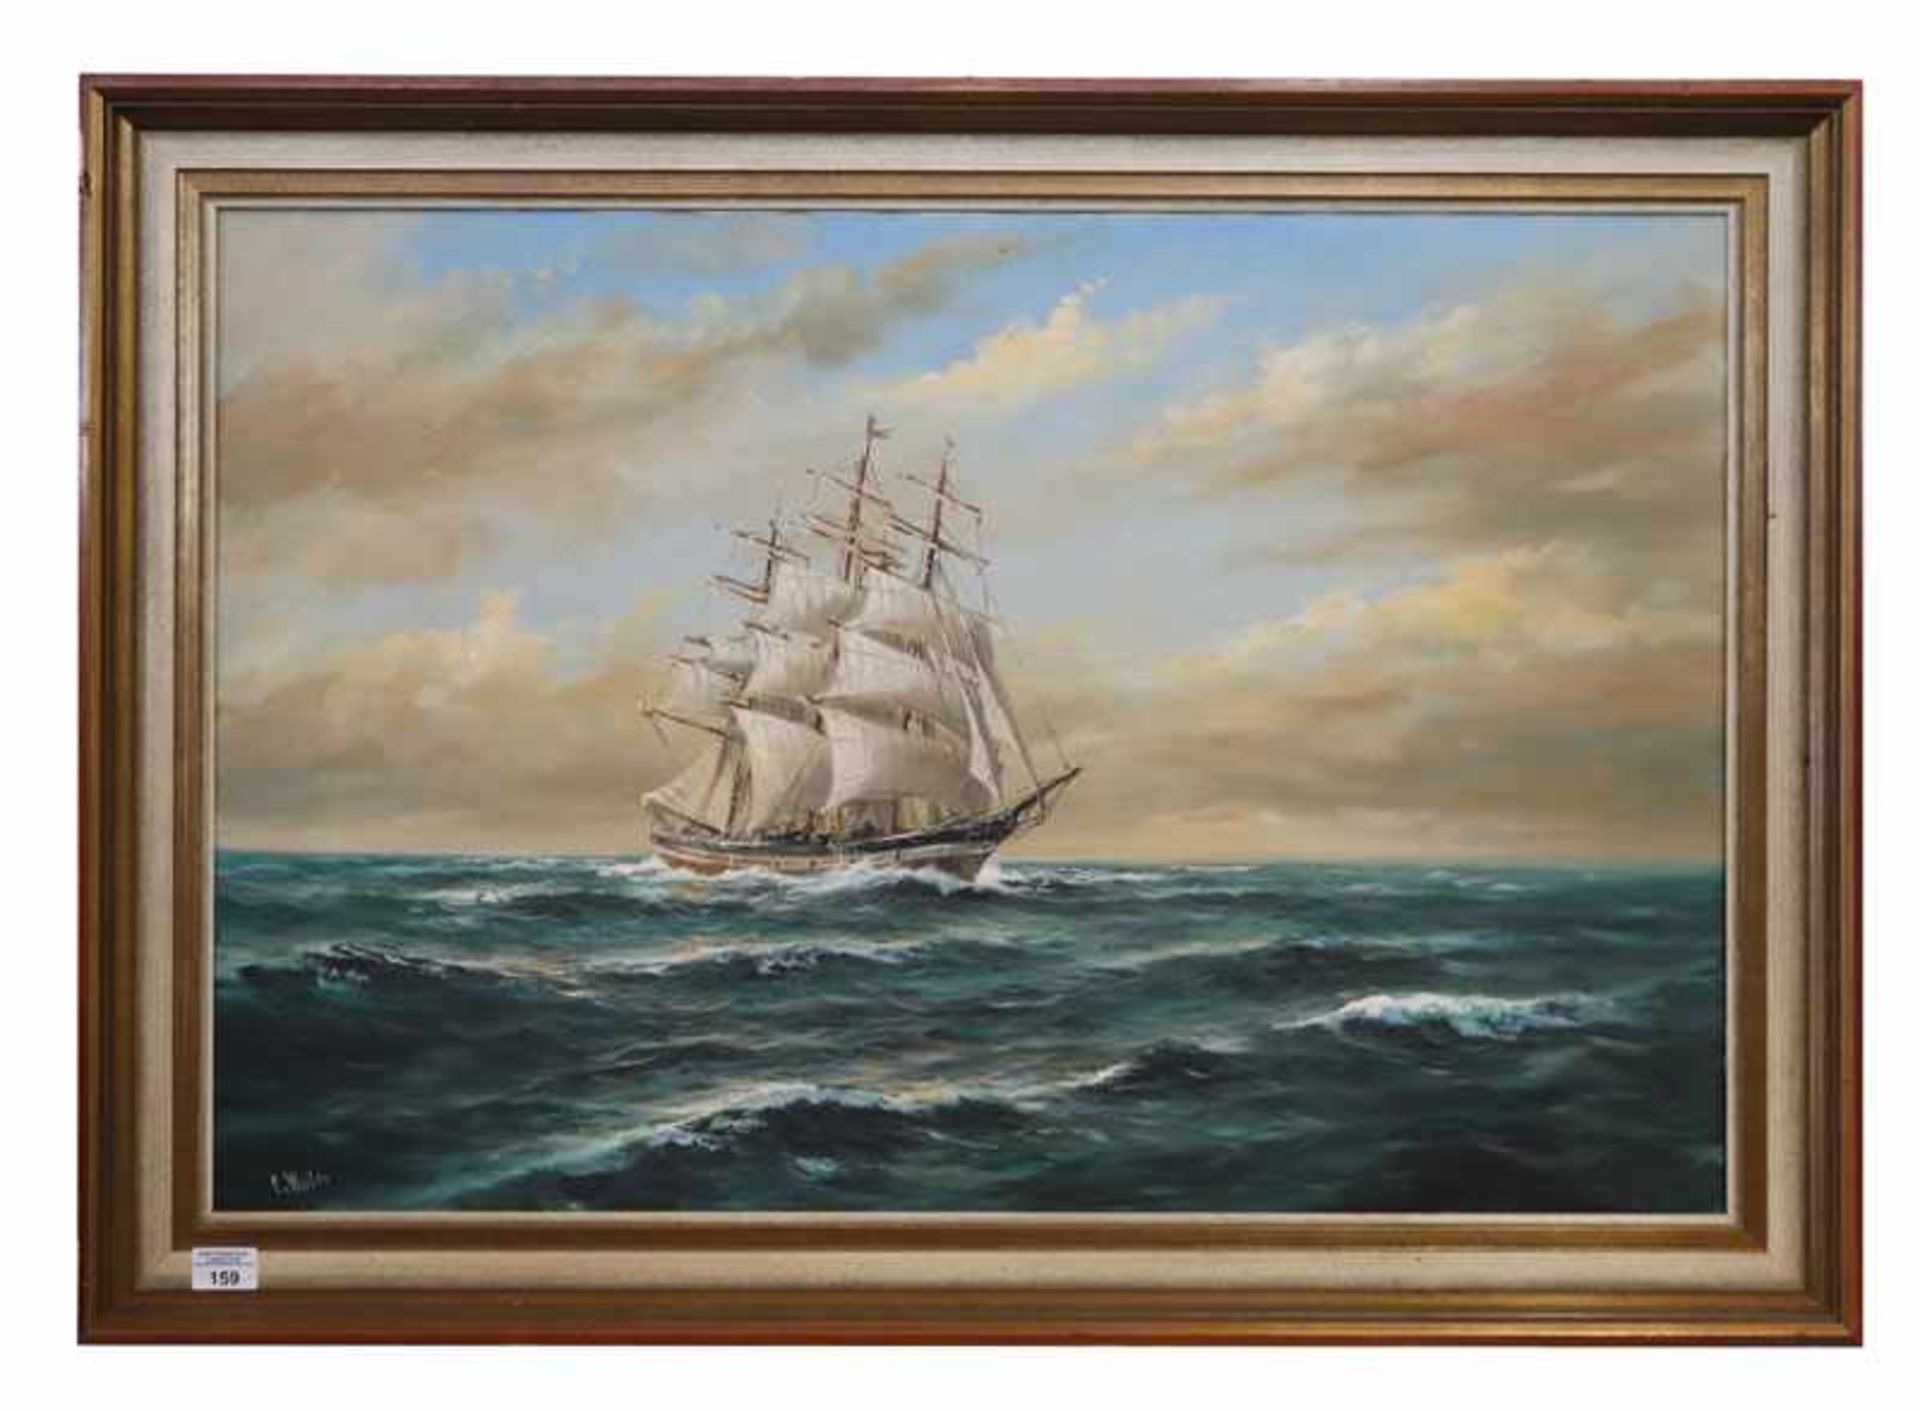 Gemälde ÖL/LW 'Segelschiff auf dem Meer', signiert C. Weiler, gerahmt, Rahmen beschädigt, incl.